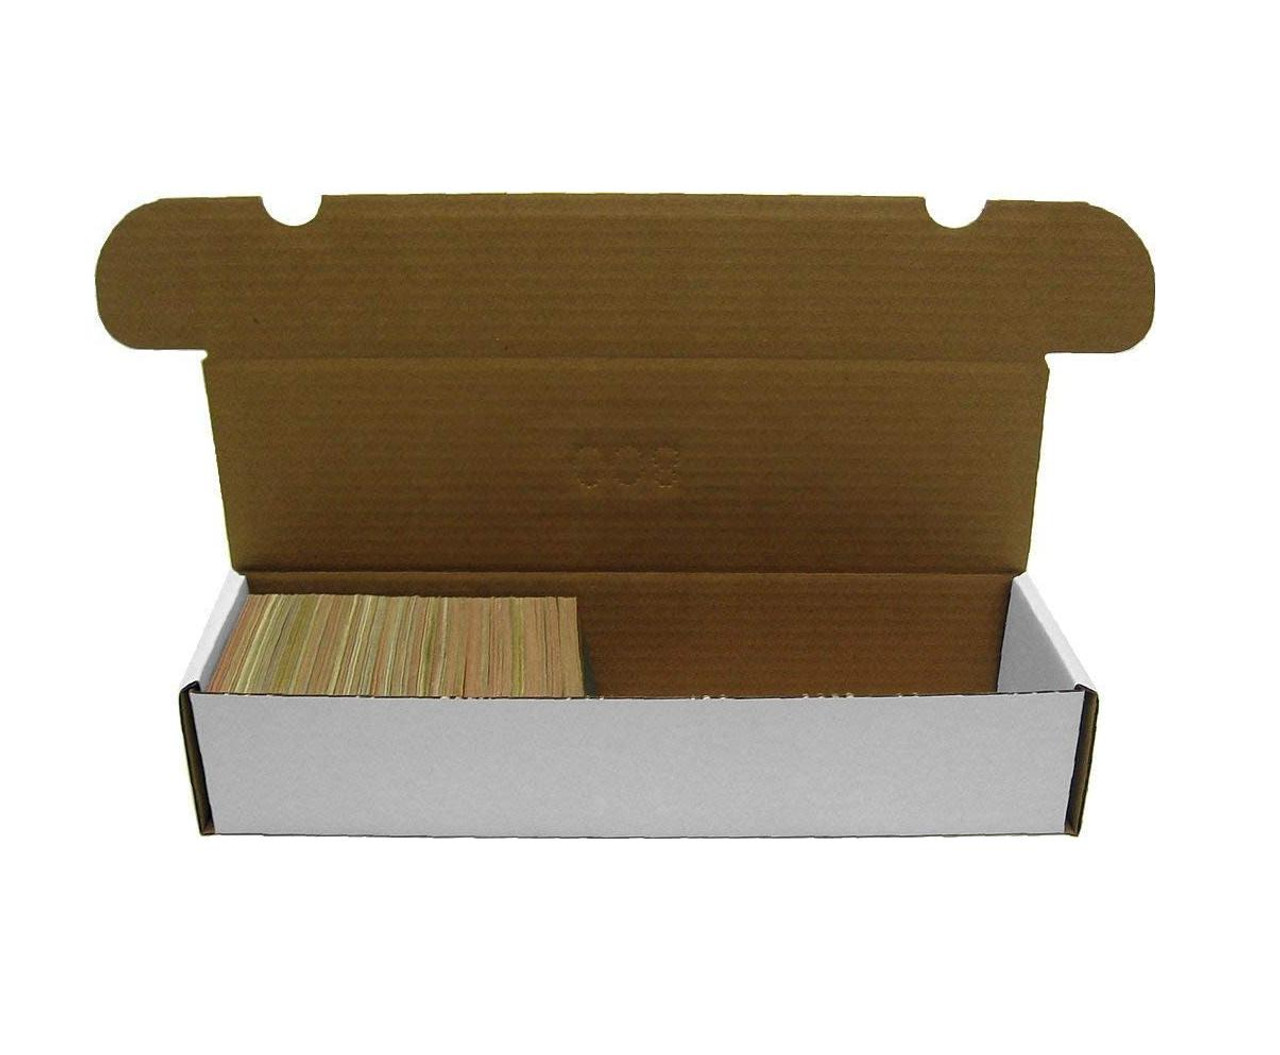 800 Count Size Cardboard Trading Card Storage Box